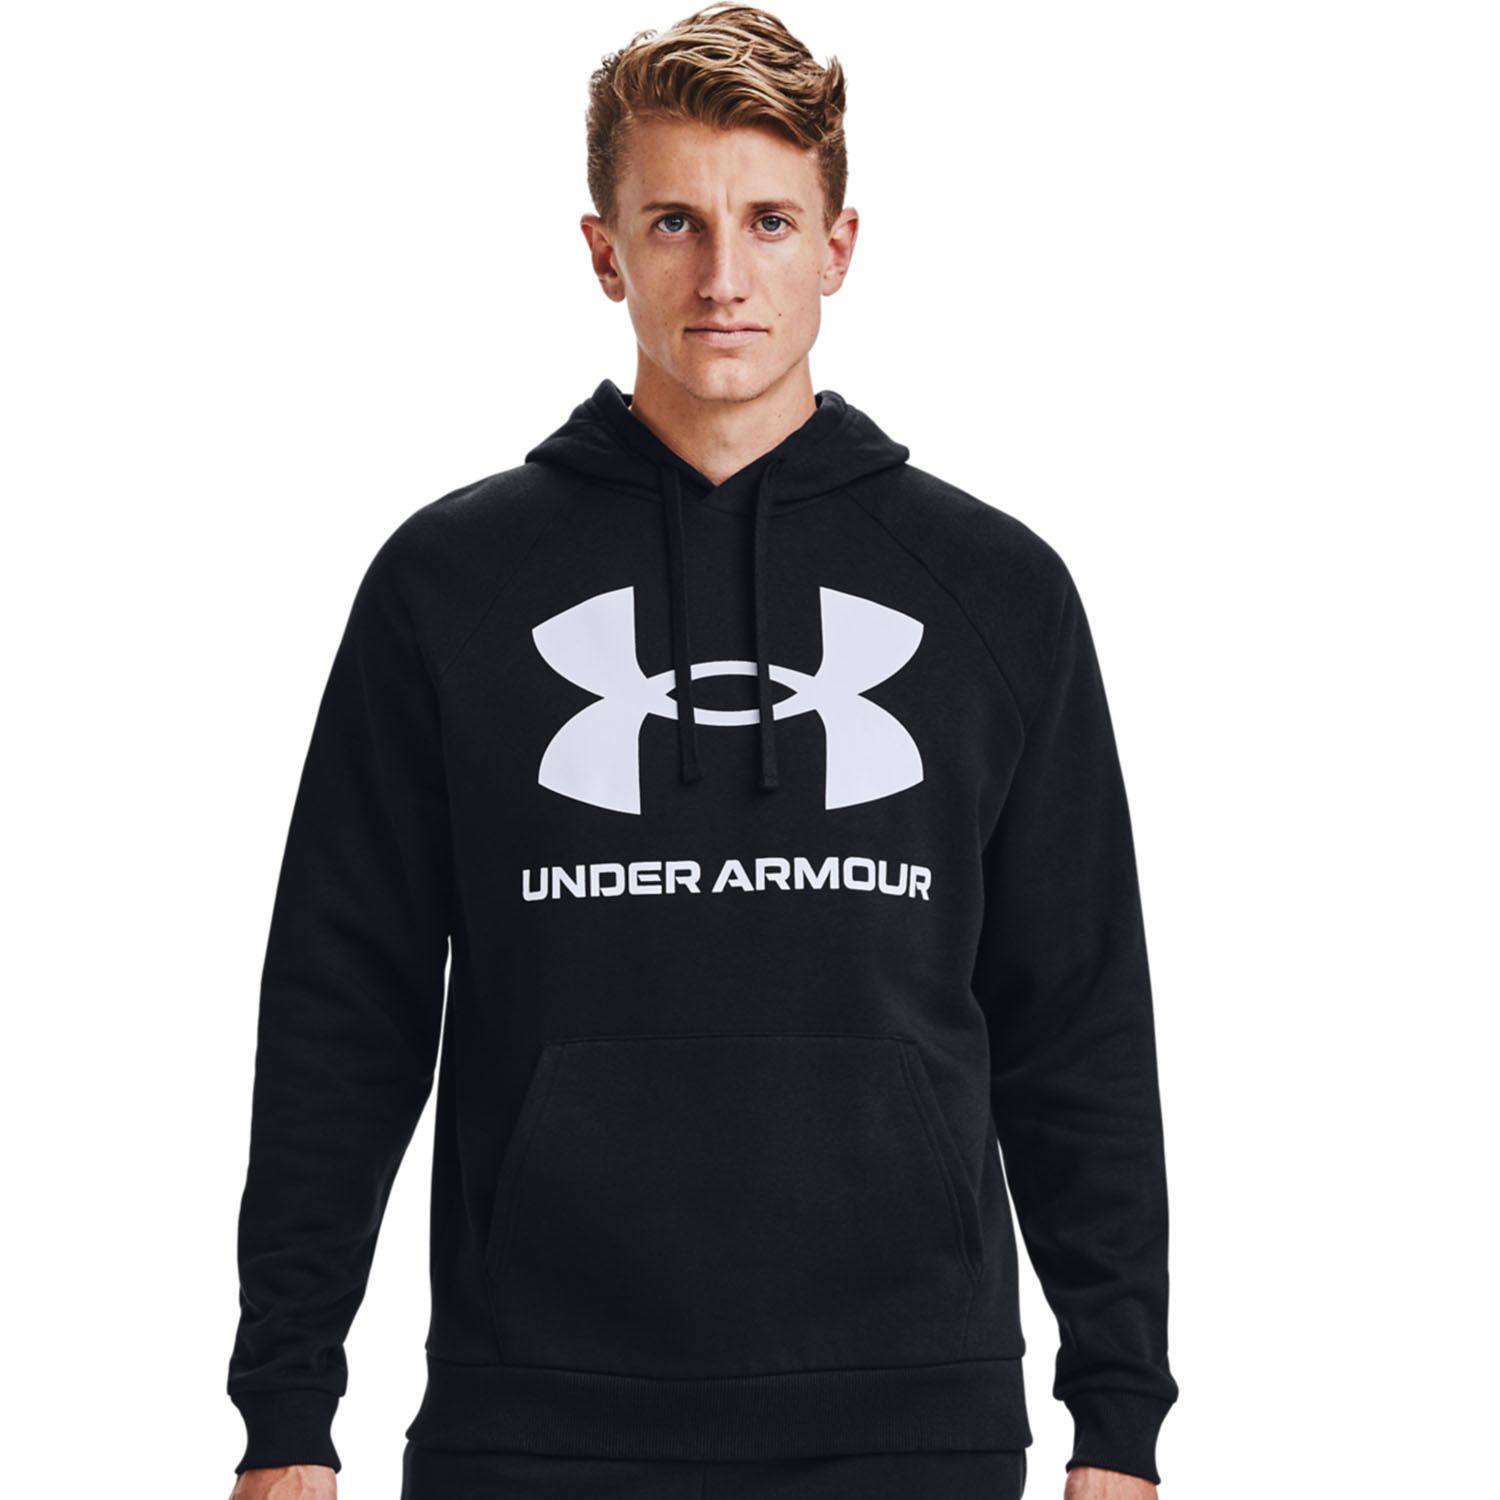 Under Armour Hoodies \u0026 Sweatshirts Tops 